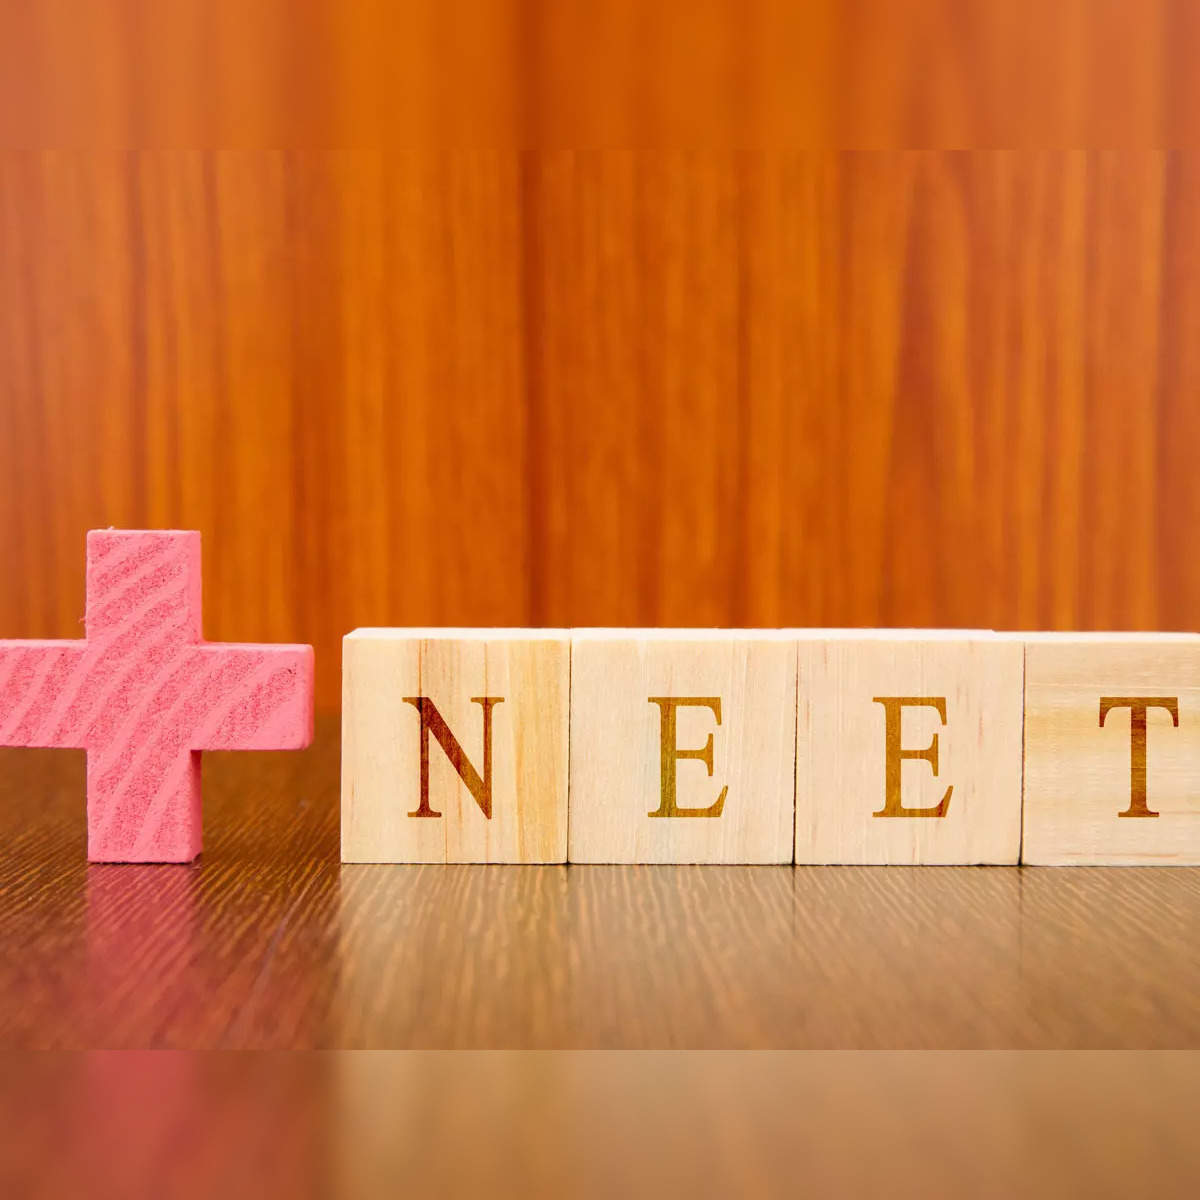 Tamil Nadu releases provisional rank list for NEET 2019 - EducationTimes.com